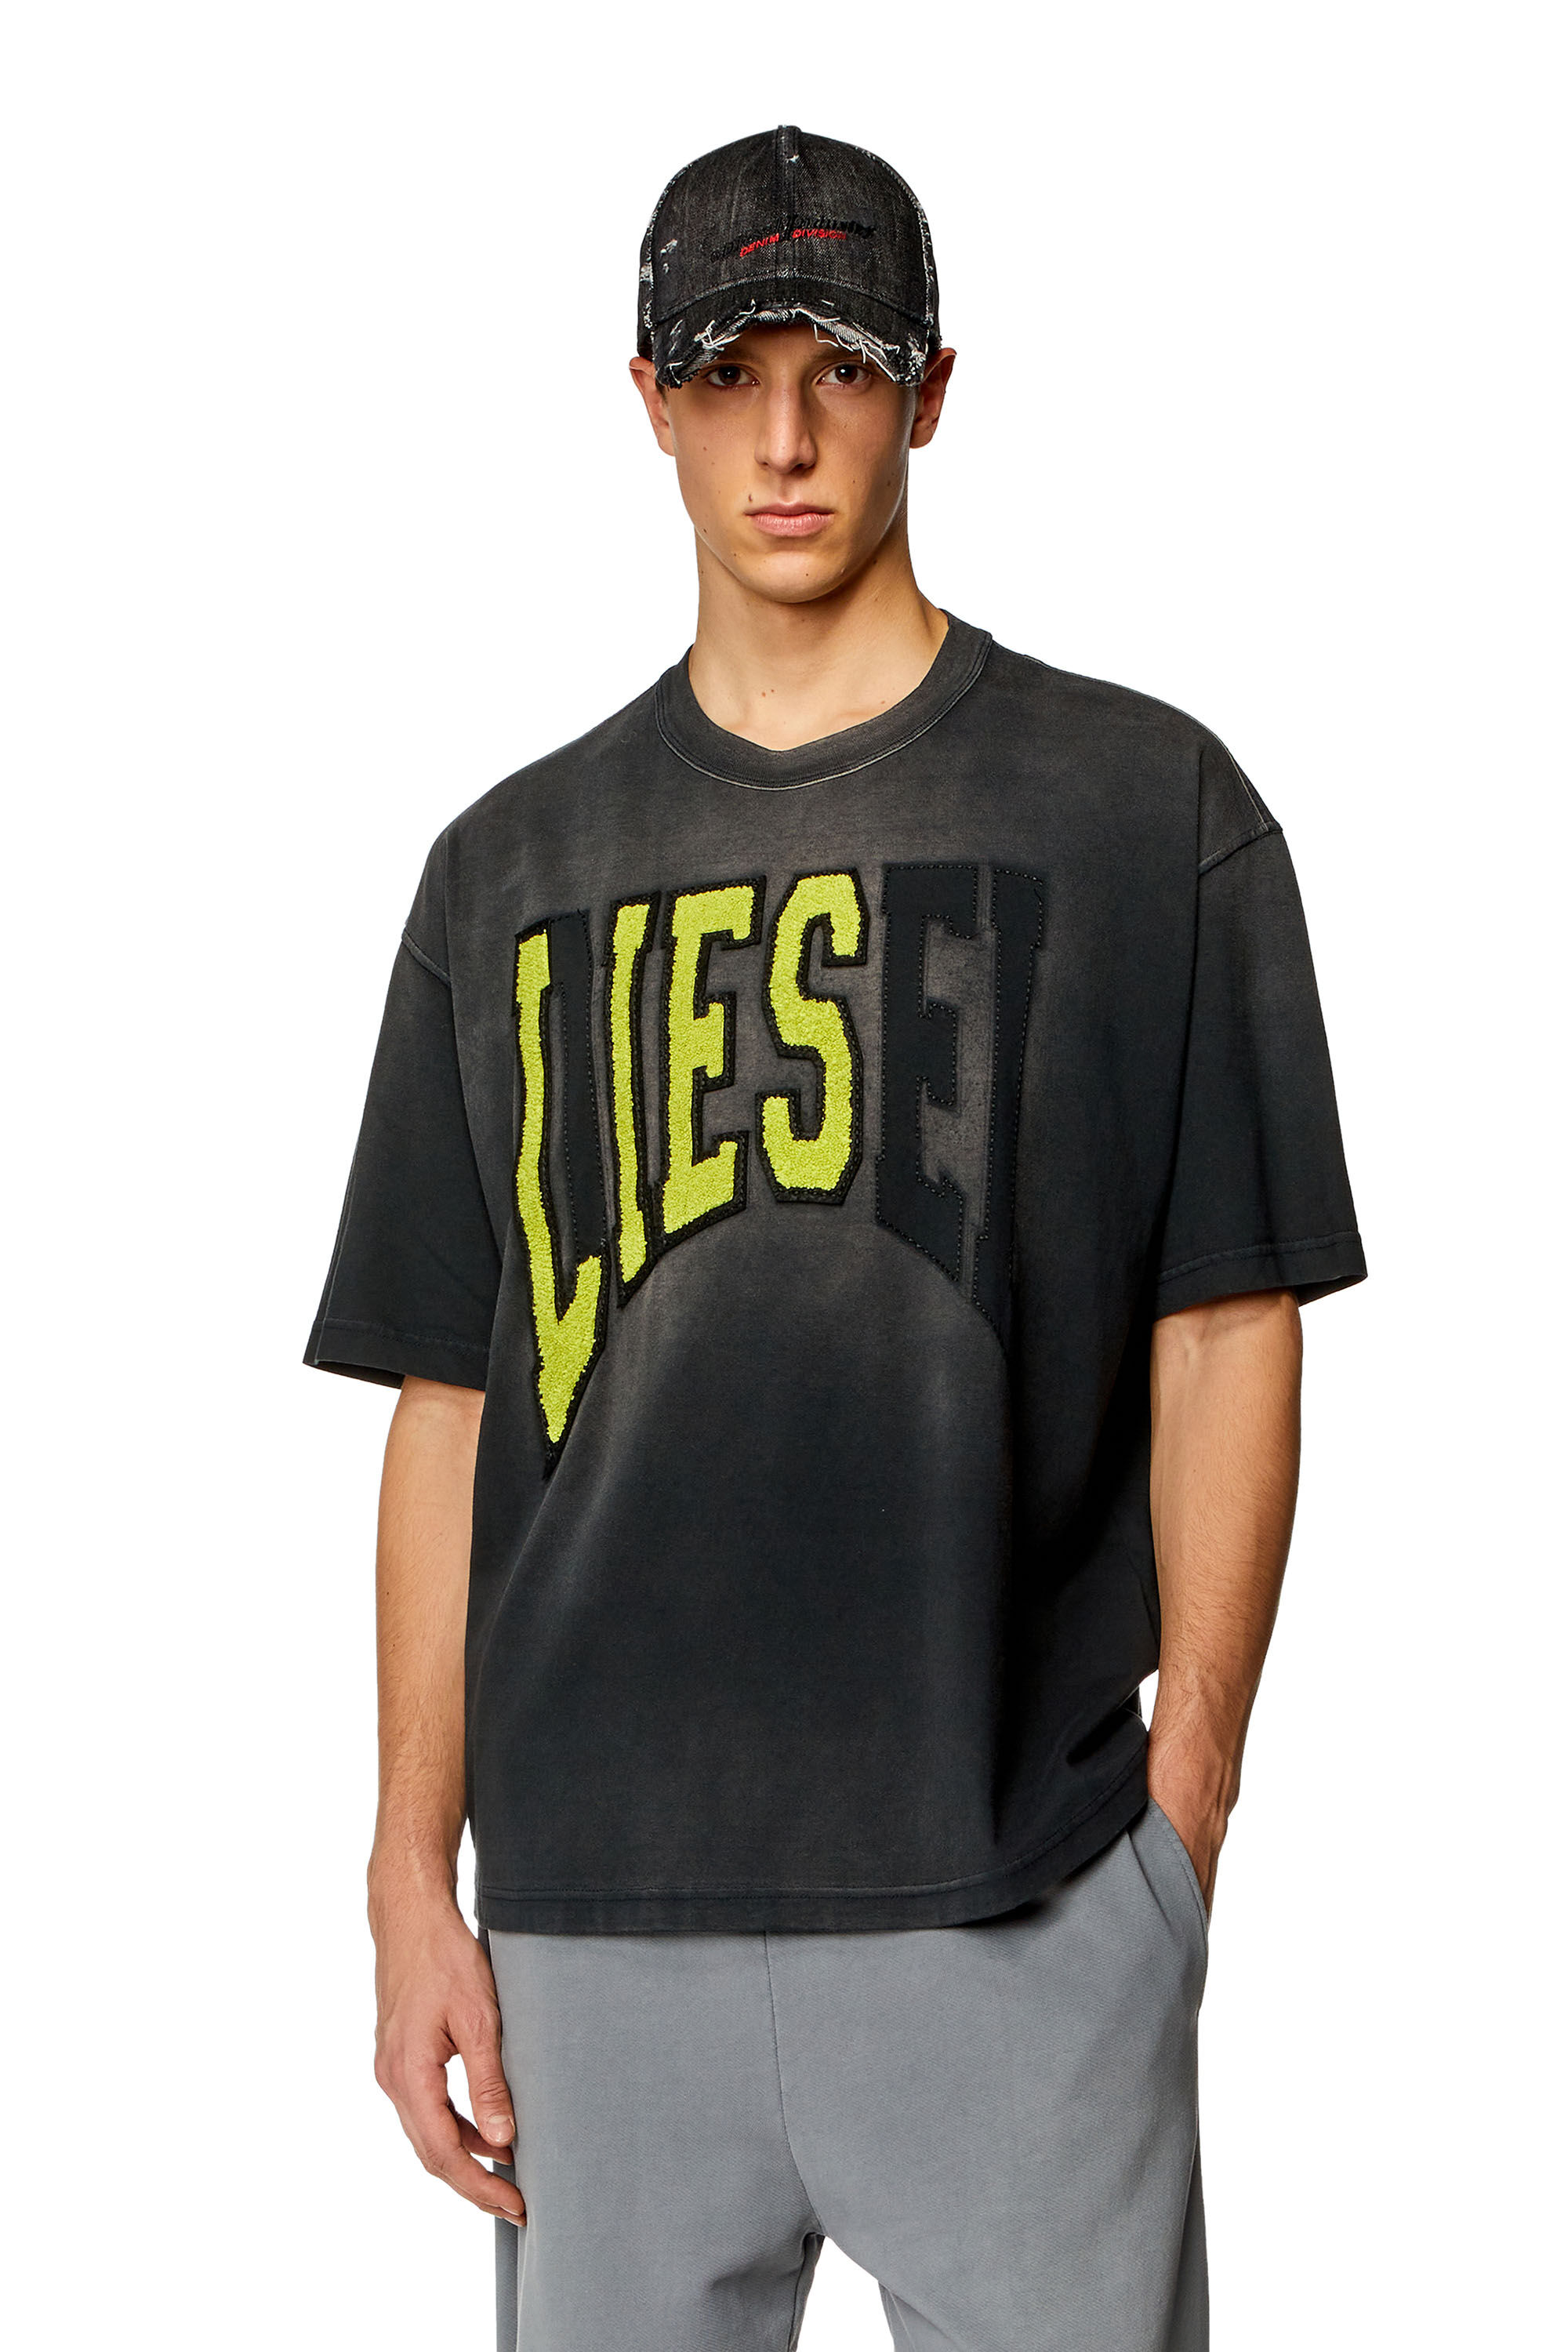 Diesel - T-WASH-N, Hombre Camiseta extragrande con logotipo Diesel Lies in Negro - Image 3